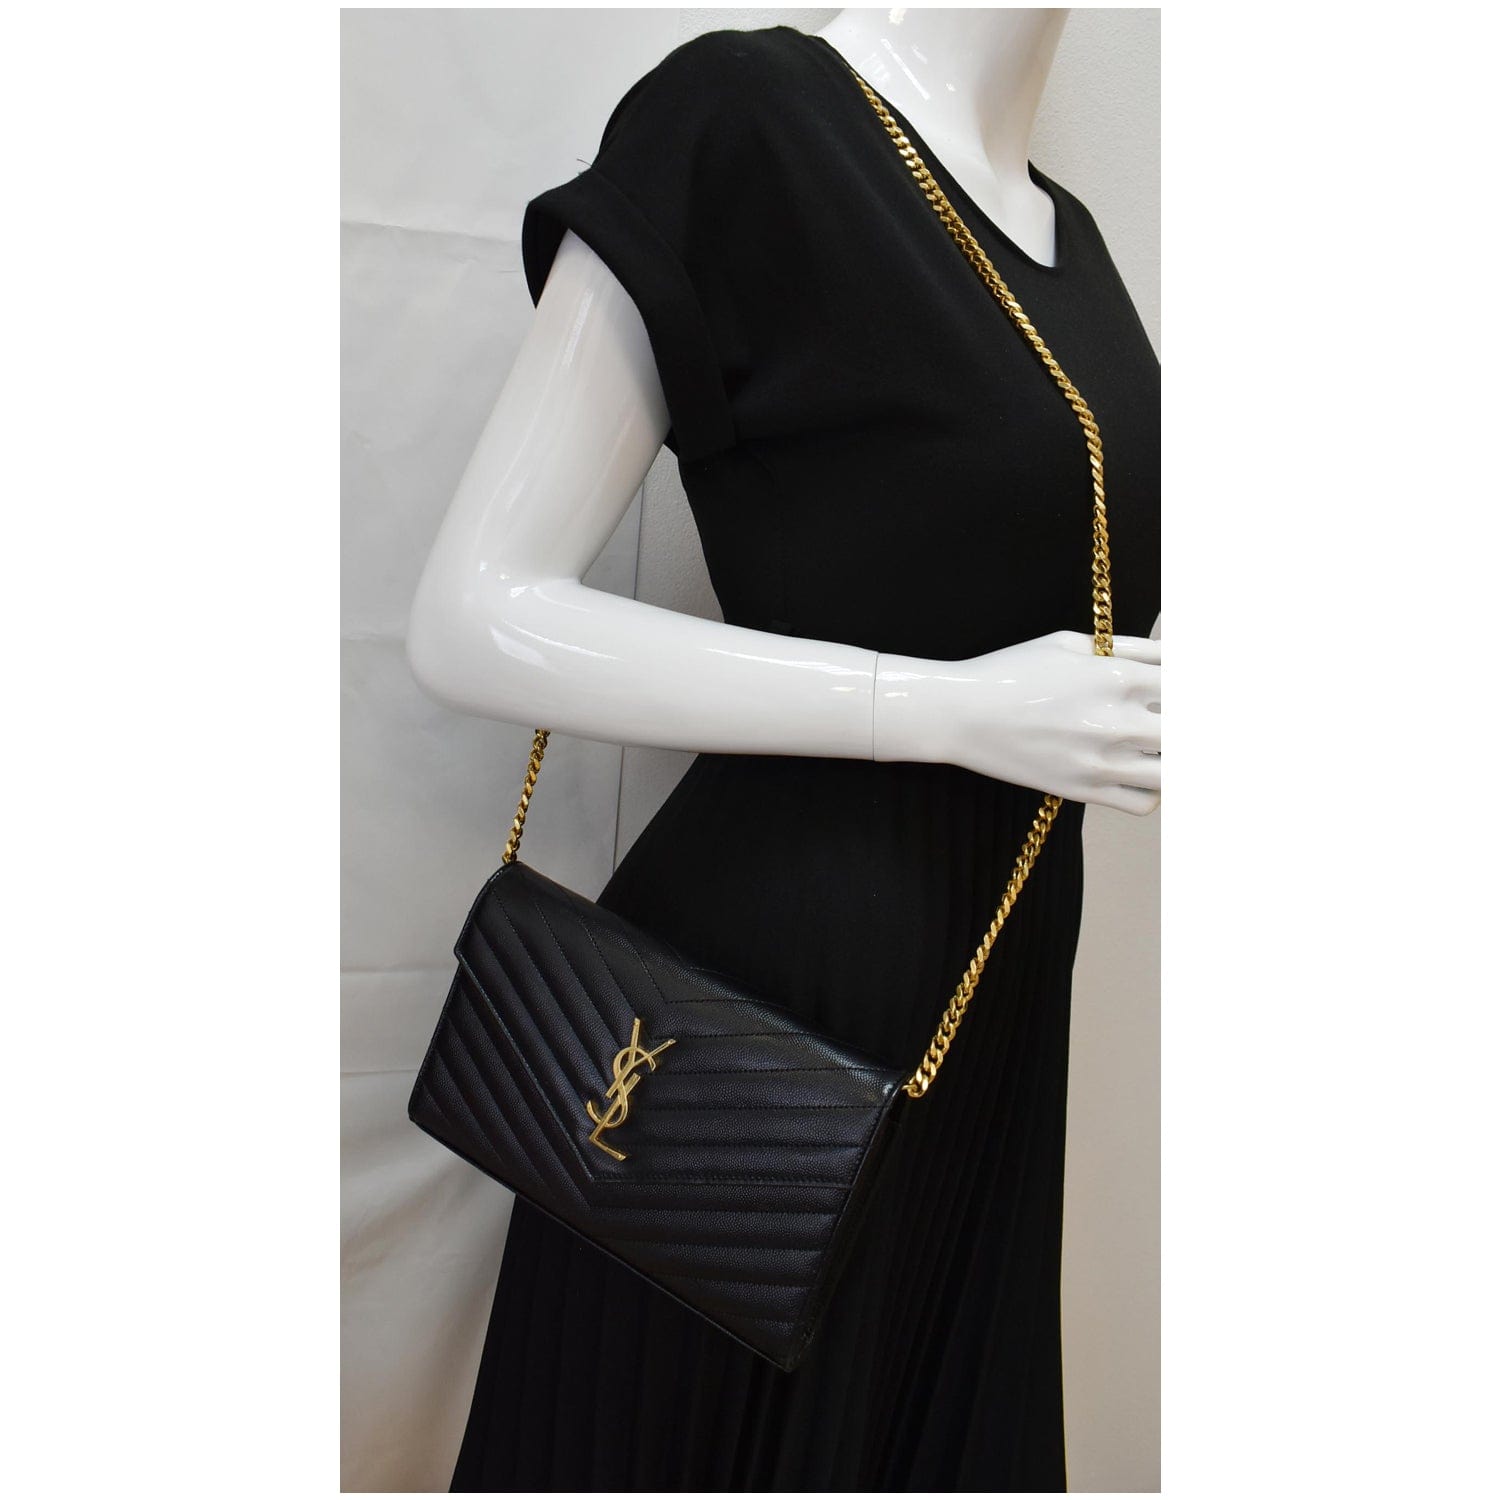 Black Yves Saint Laurent Wallet on a chain crossbody Handbag :  r/Highqualityreplica